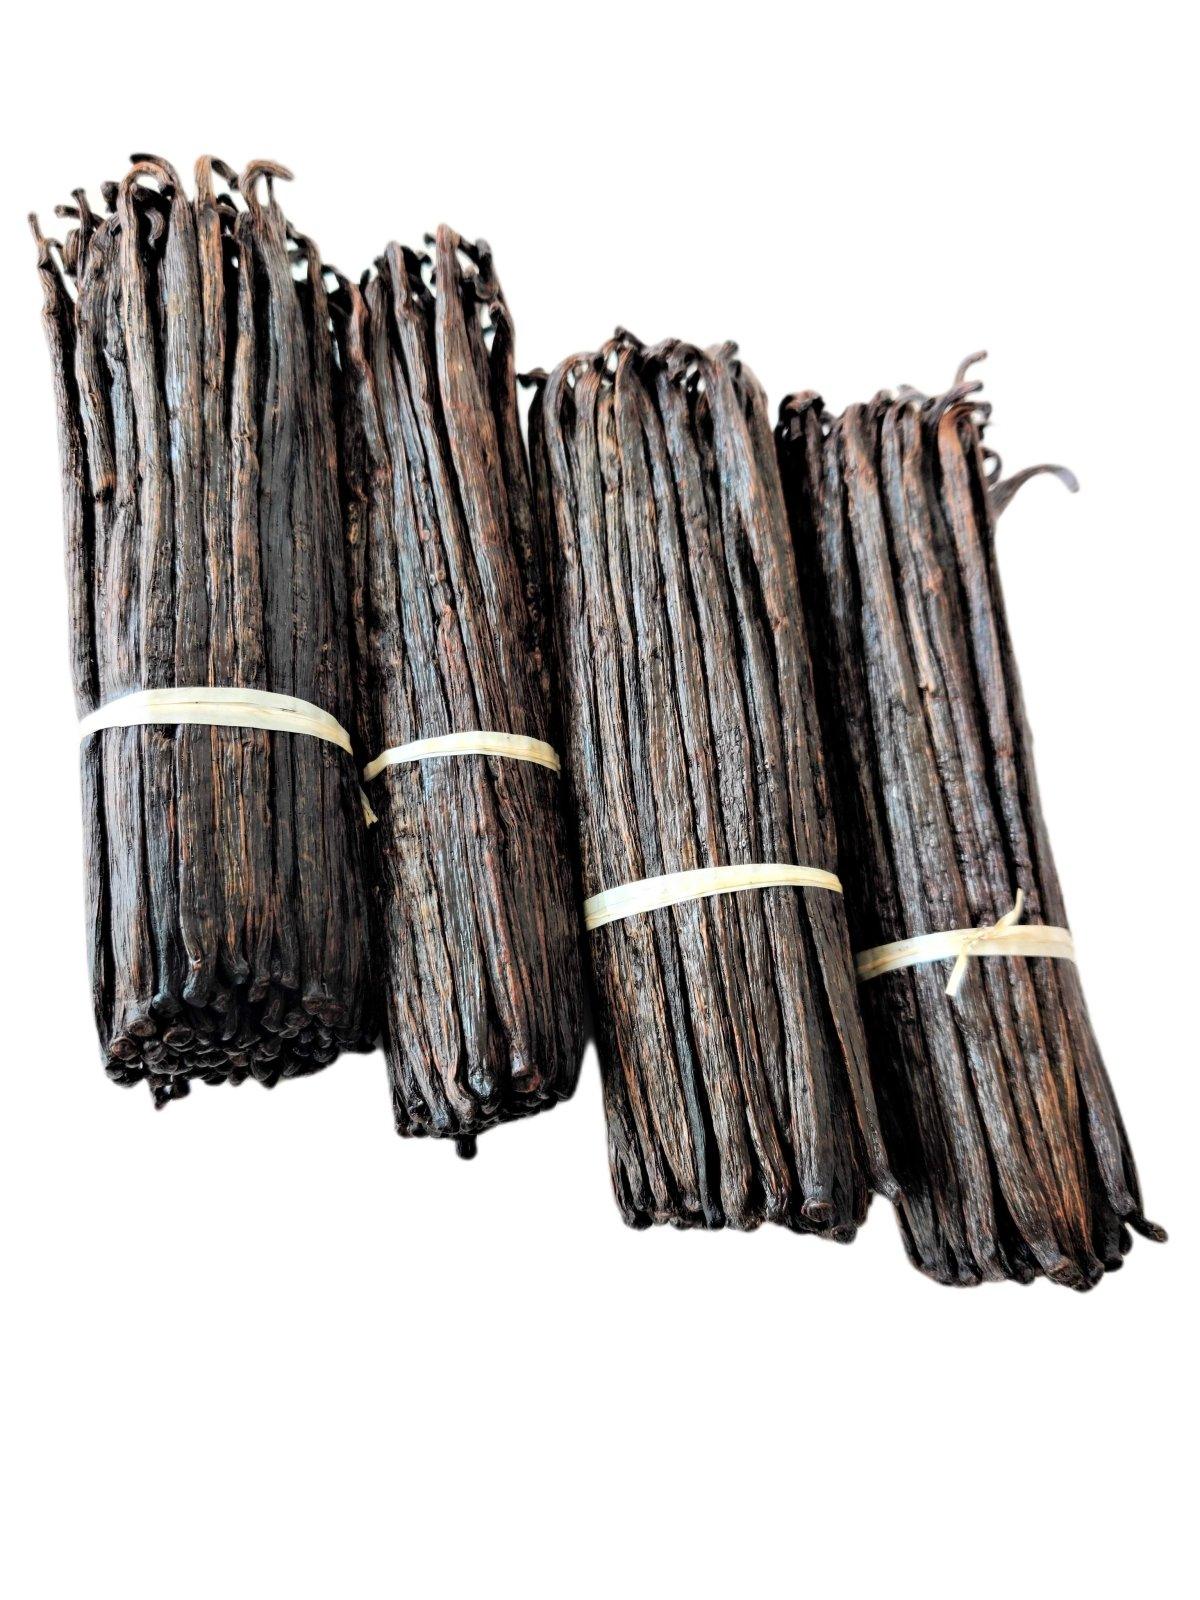 Madagascar Bourbon Extract Vanilla Beans Grade-B <br>For Extract Making<BR>1oz, 3oz, 5oz, 10oz, 20oz, 30oz